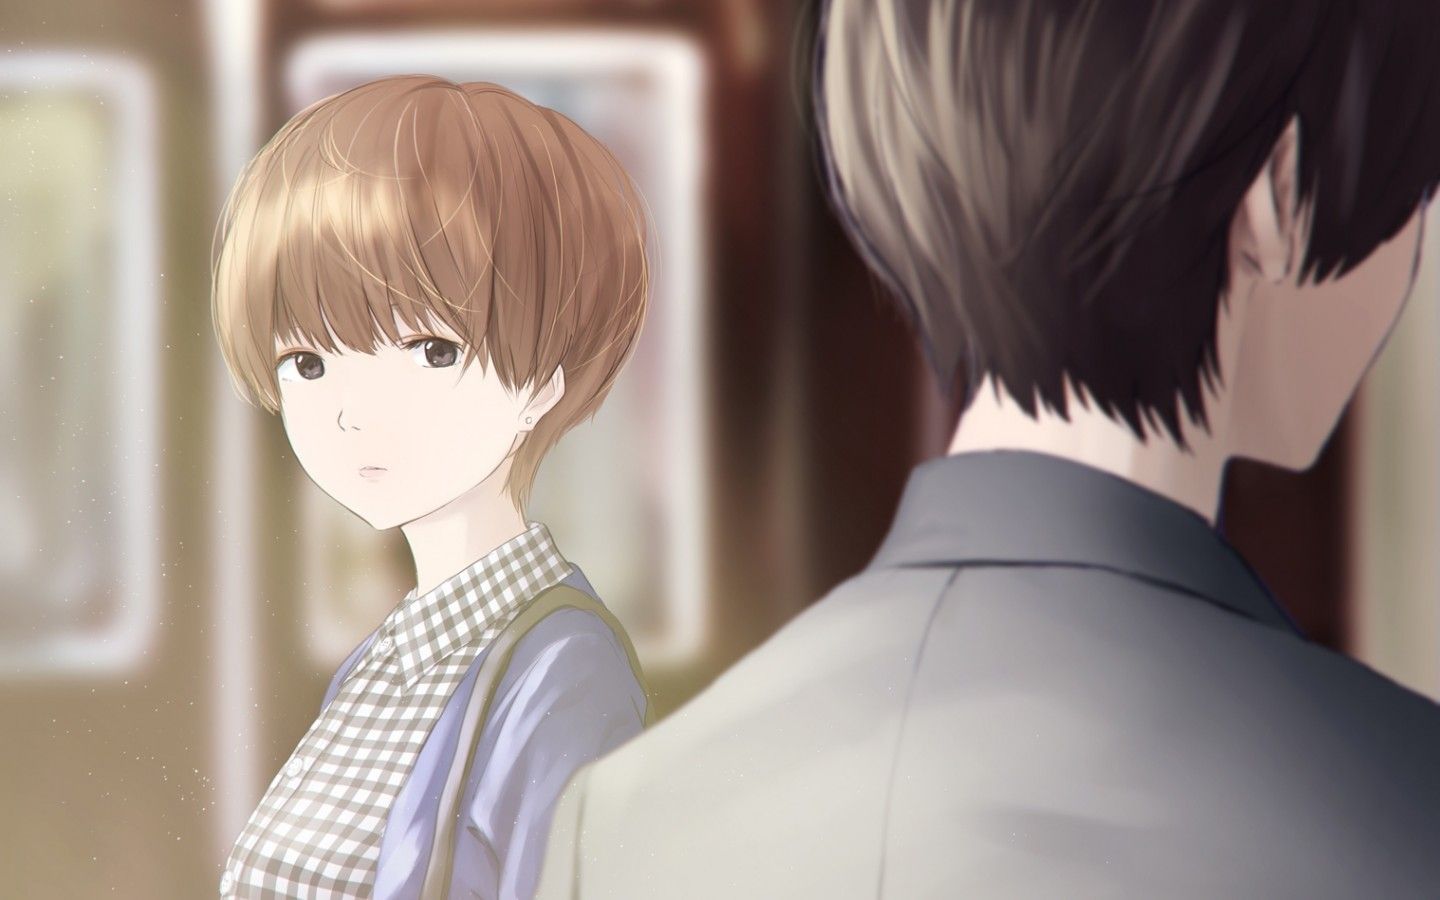 Download 1440x900 Anime Girl, Short Hair, Semi Realistic, Anime